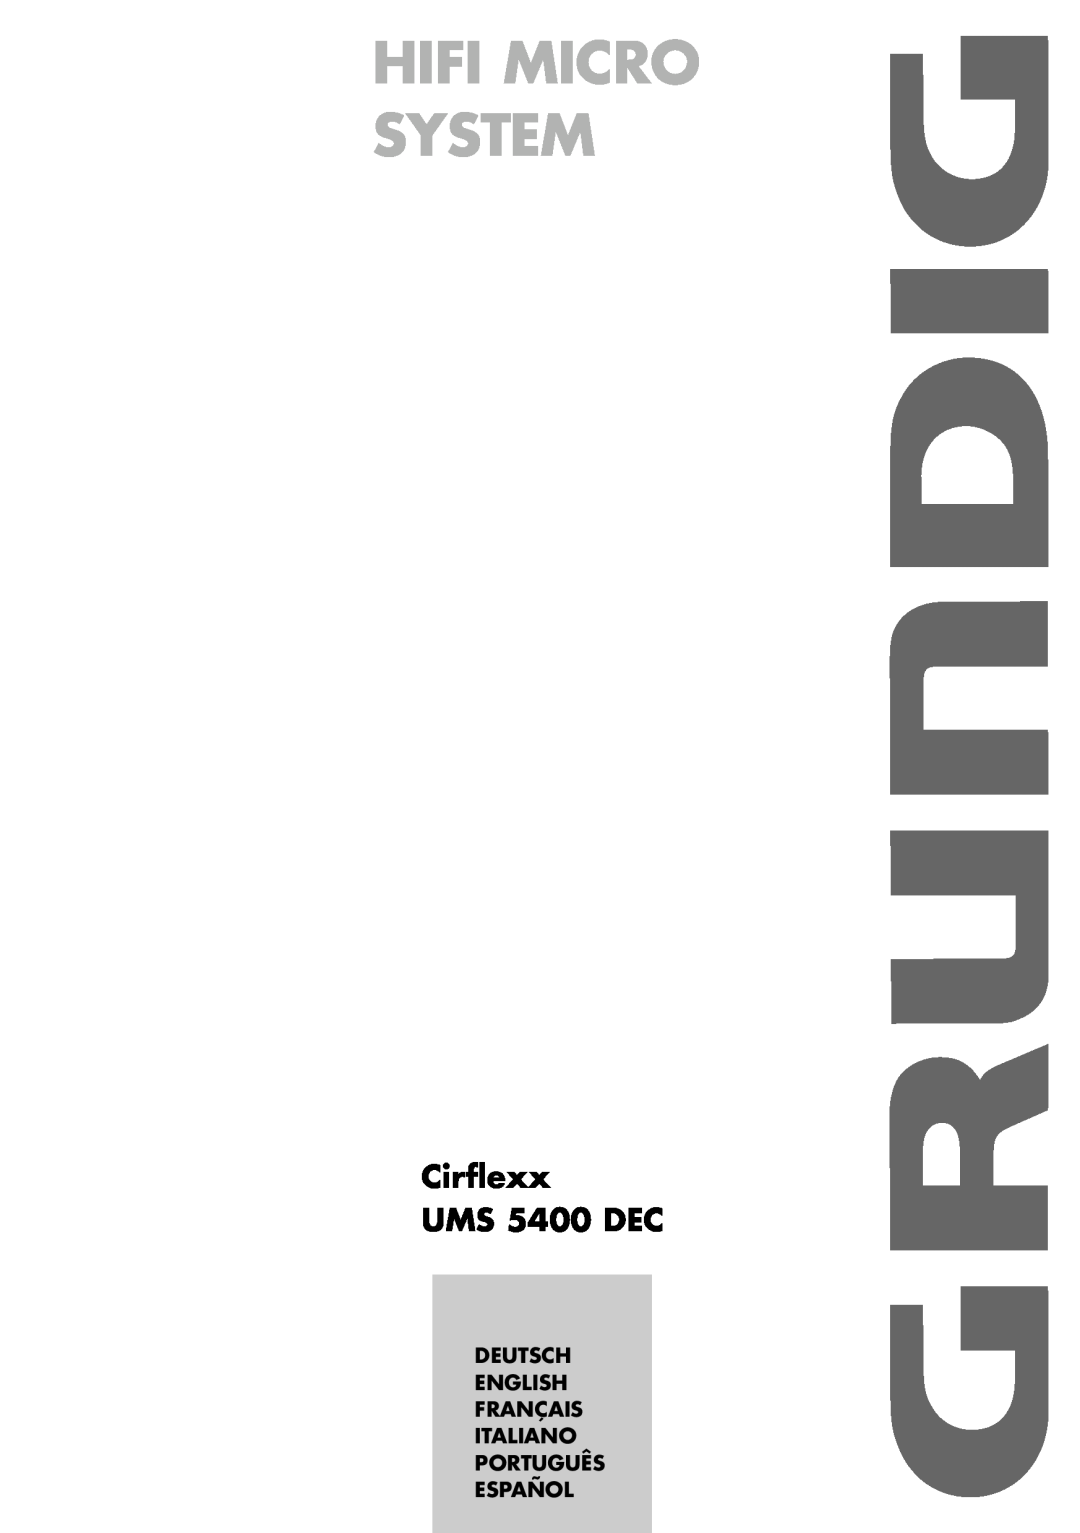 Grundig cirflexx UMS 5400 DEC manual Deutsch English Français Italiano Português, Español, Hifi Micro System 